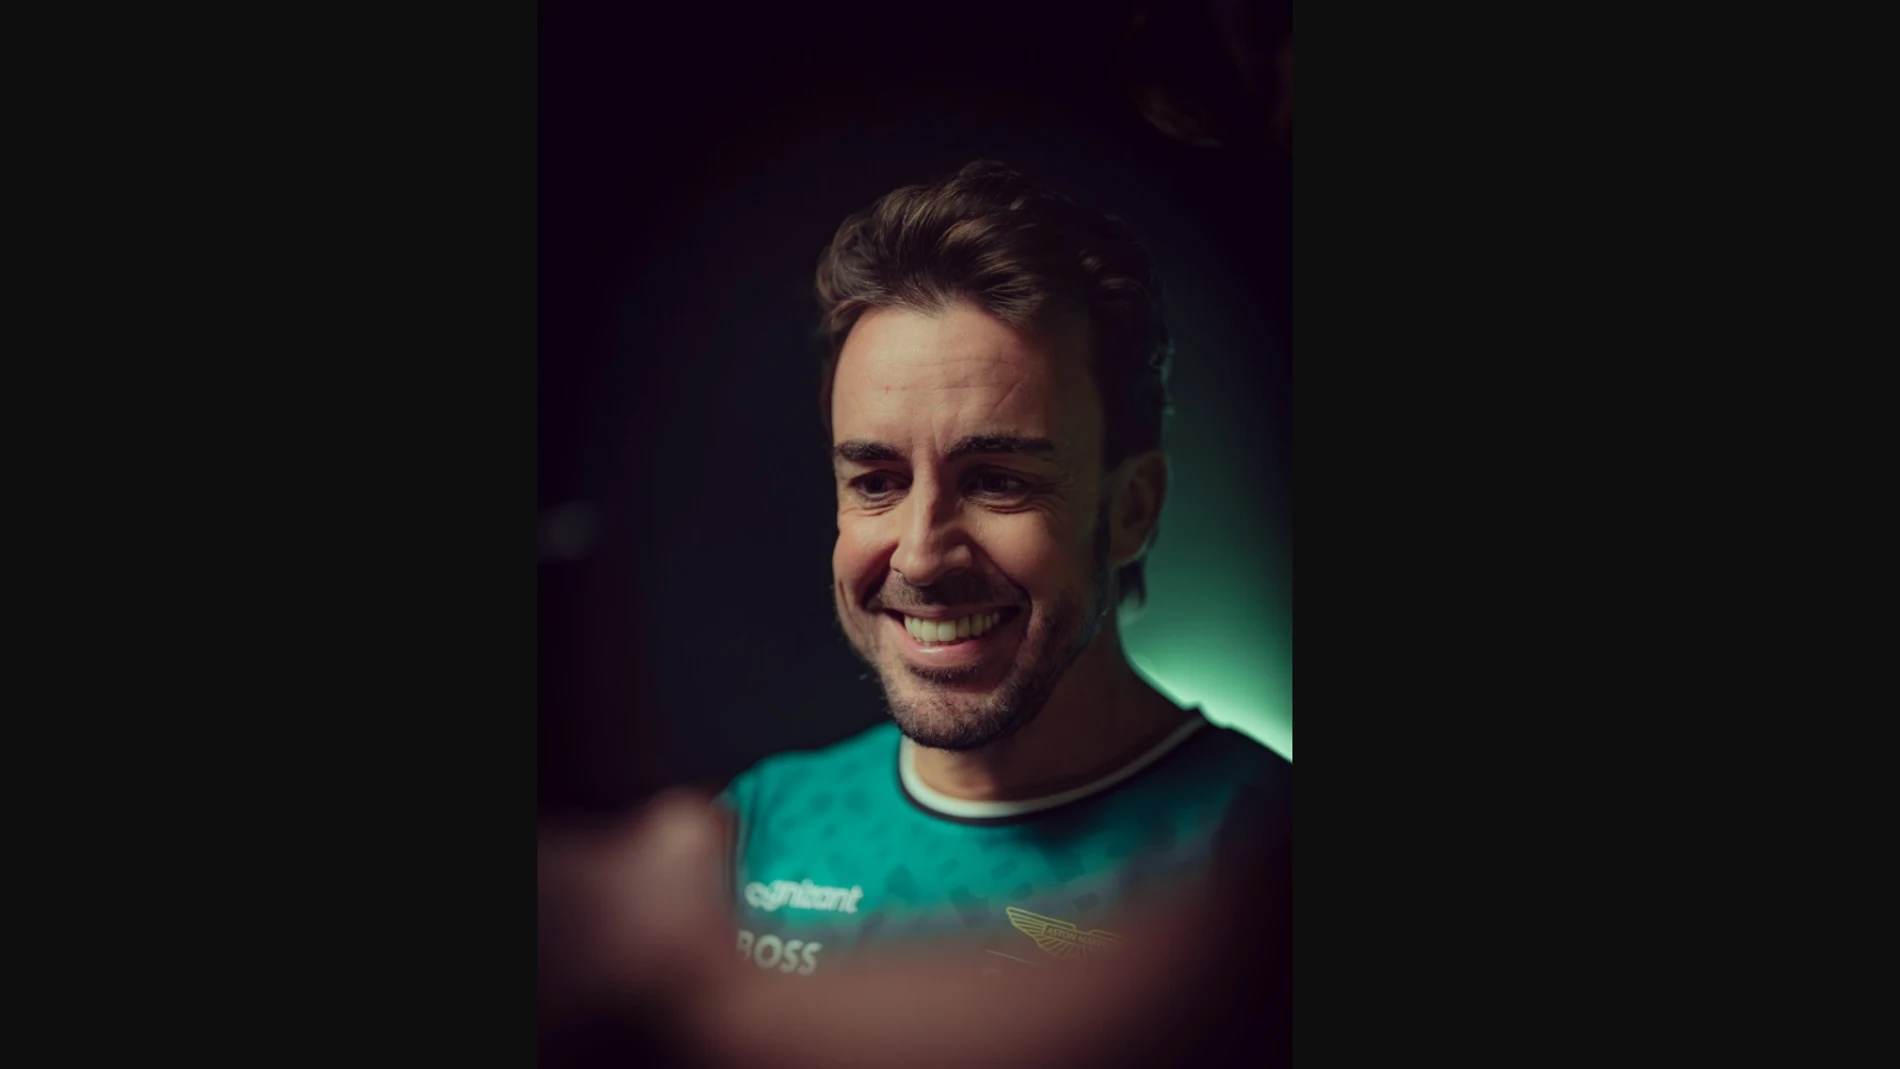 Fernando Alonso, sonriente